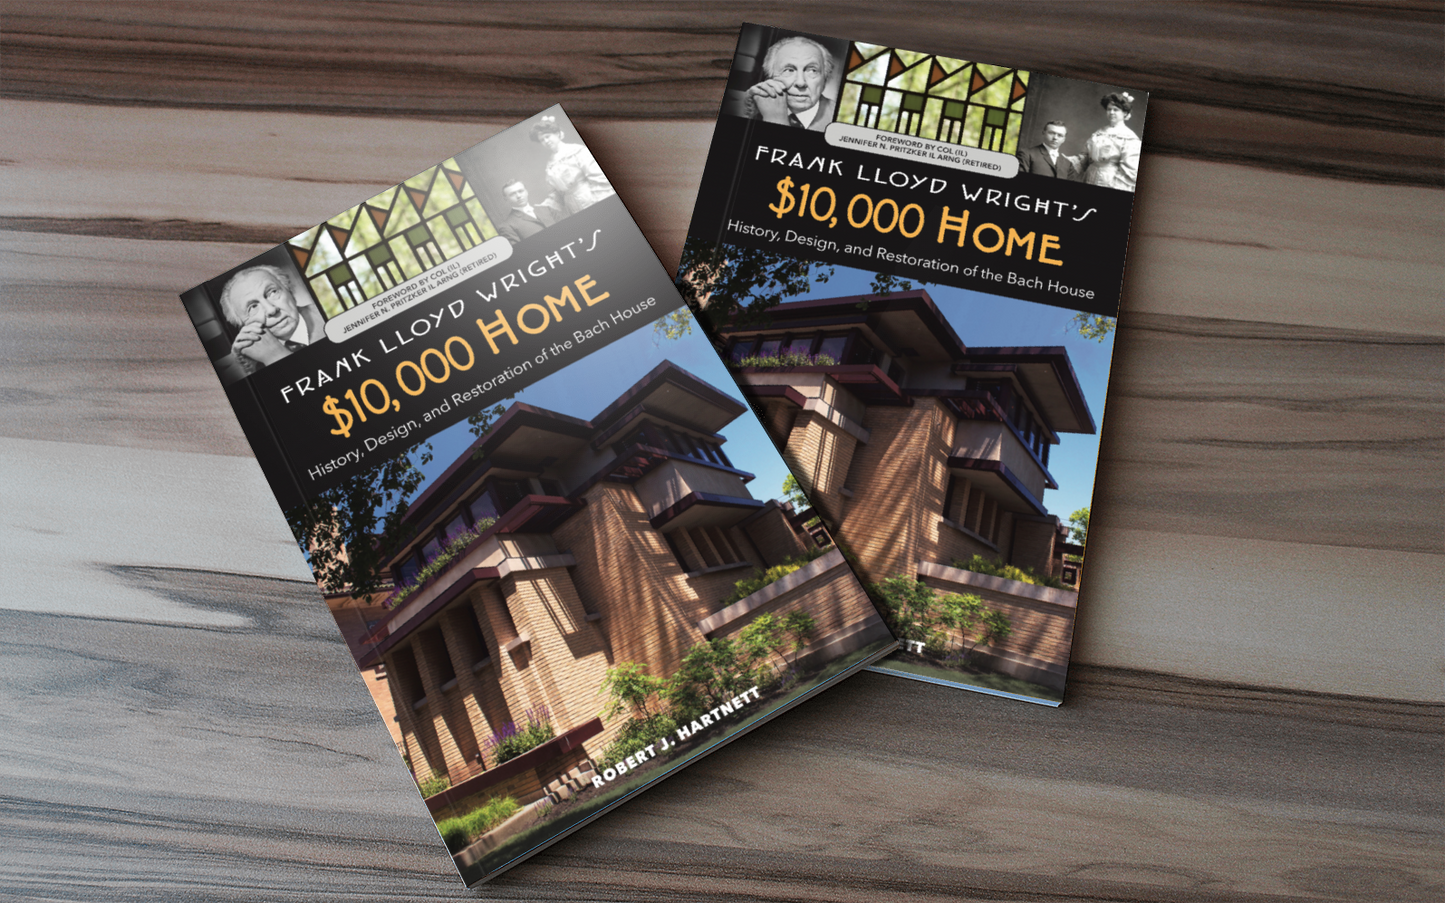 Frank Lloyd Wright's $10,000 Home: History, Design, & Restoration of the Bach House by Robert J. Hartnett